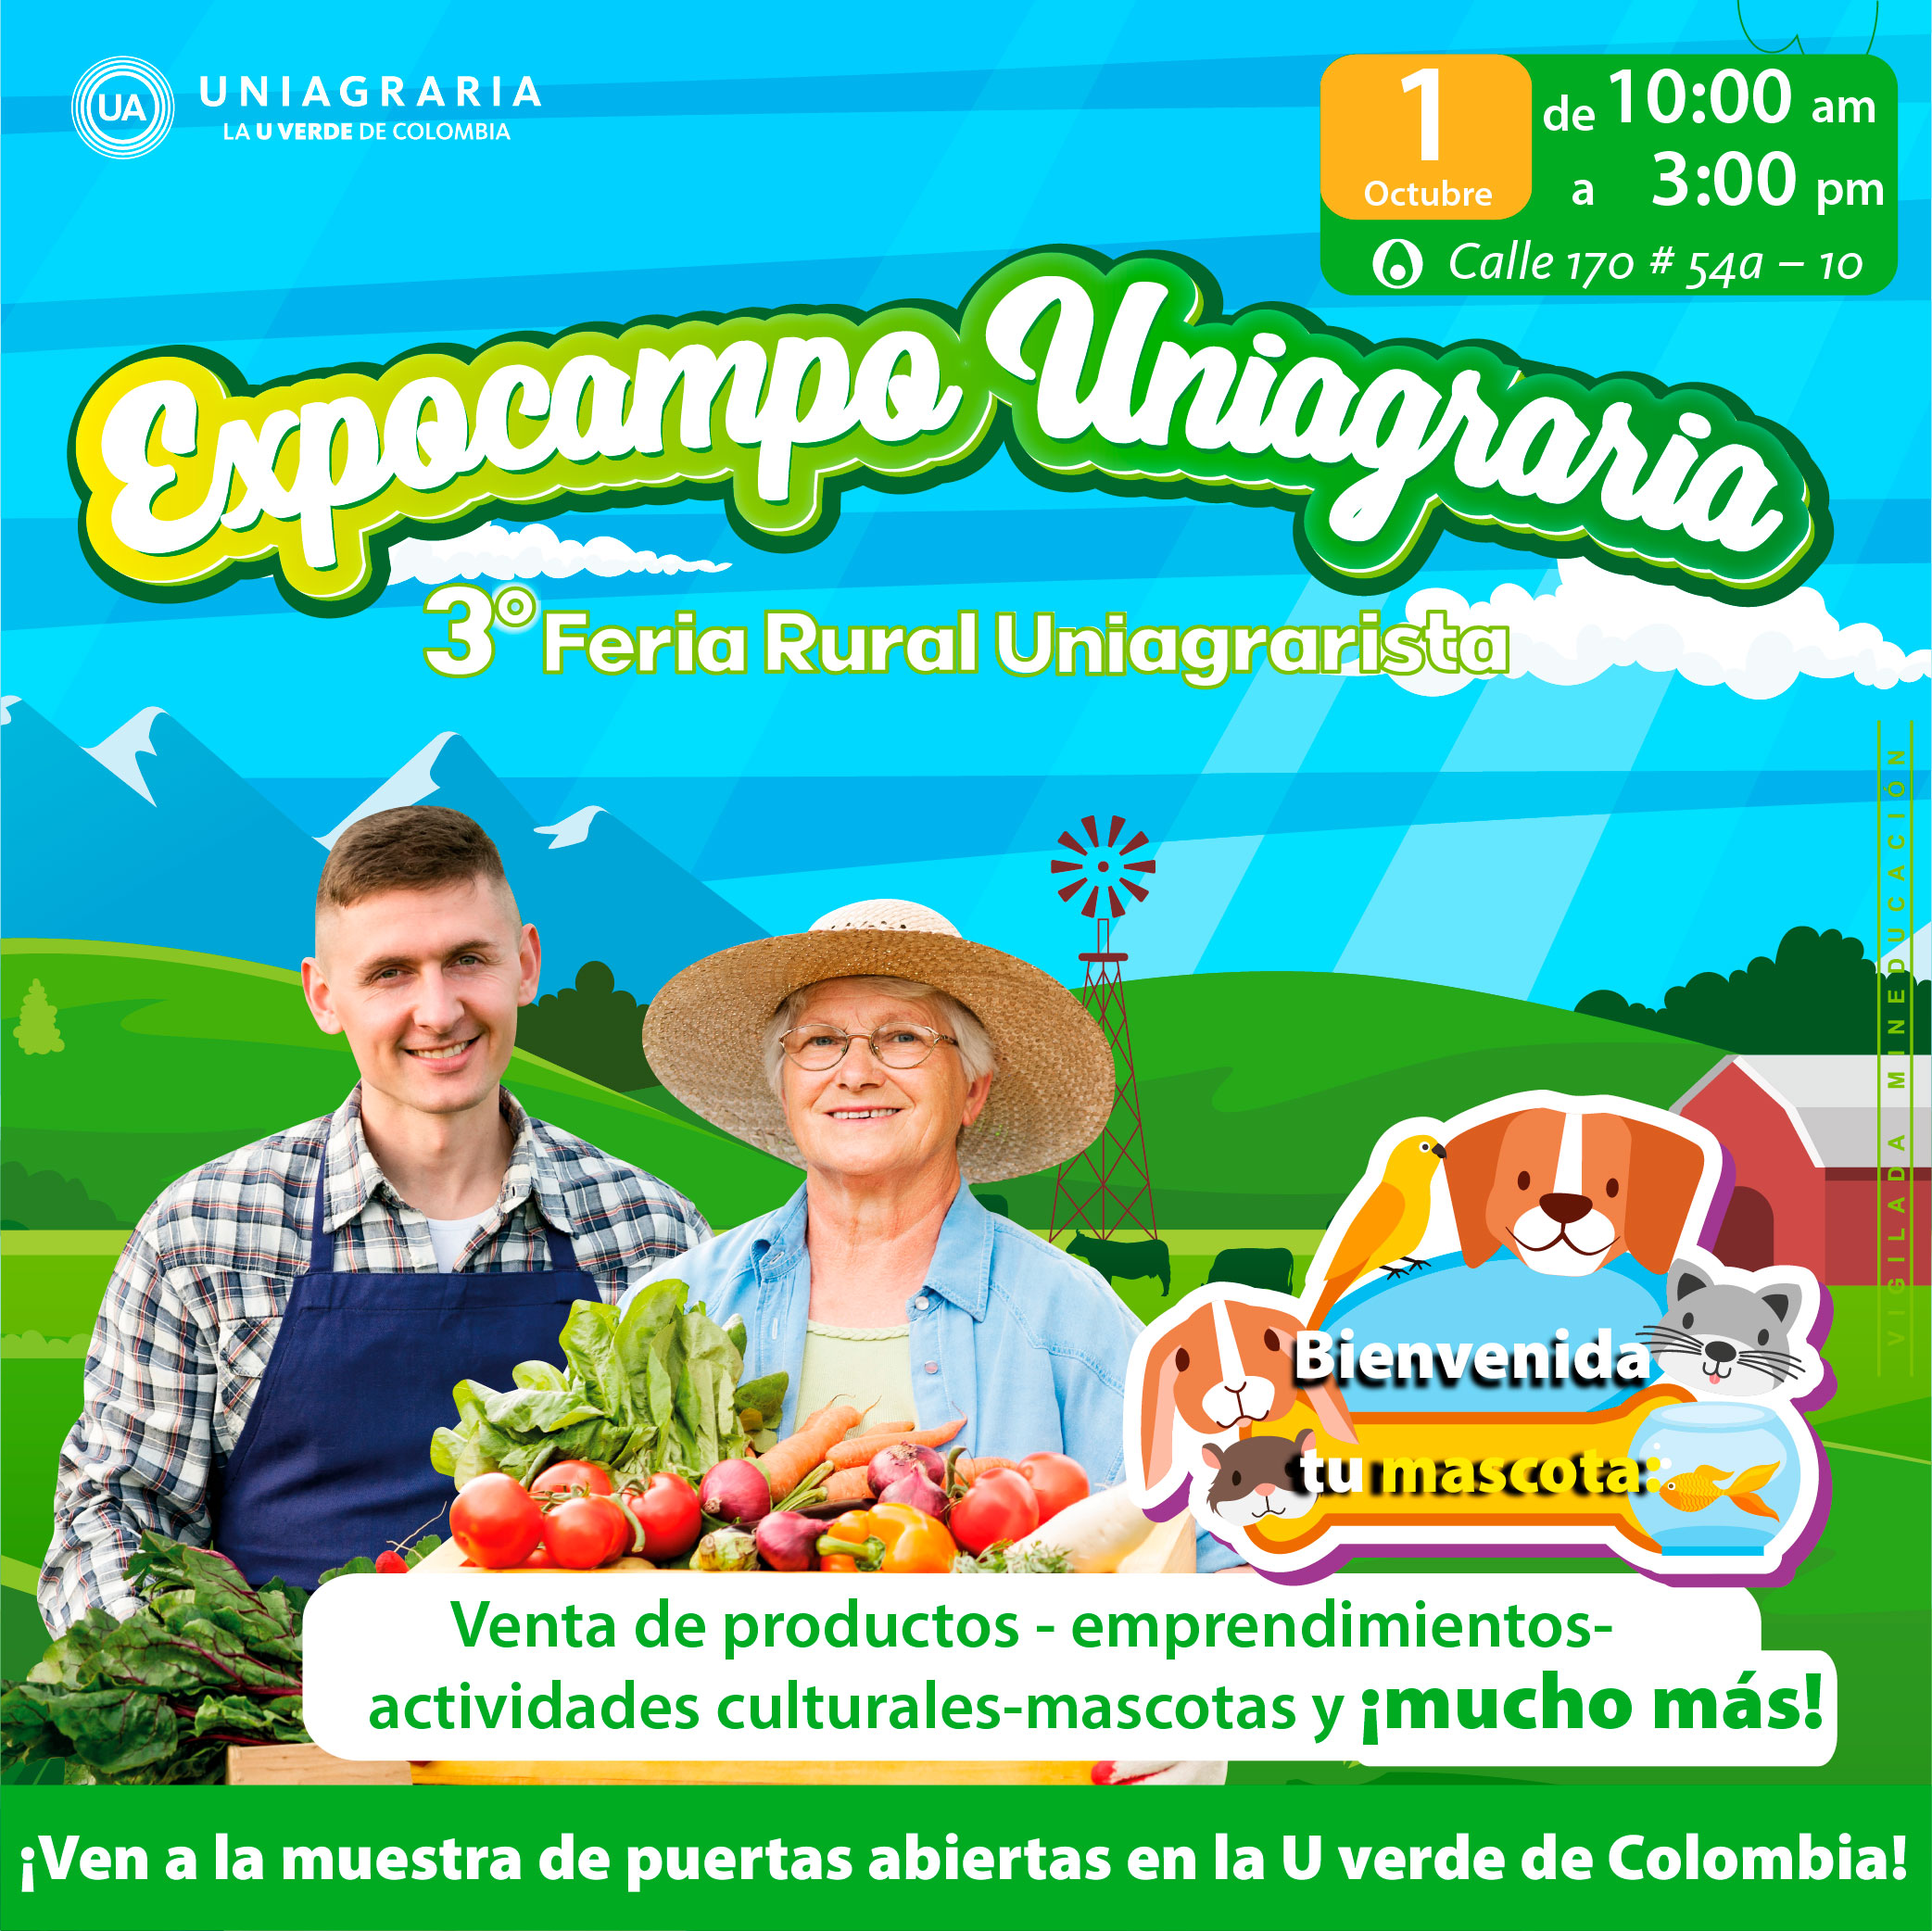 Expocampo Uniagraria: 3er Feria Rural Uniagrarista